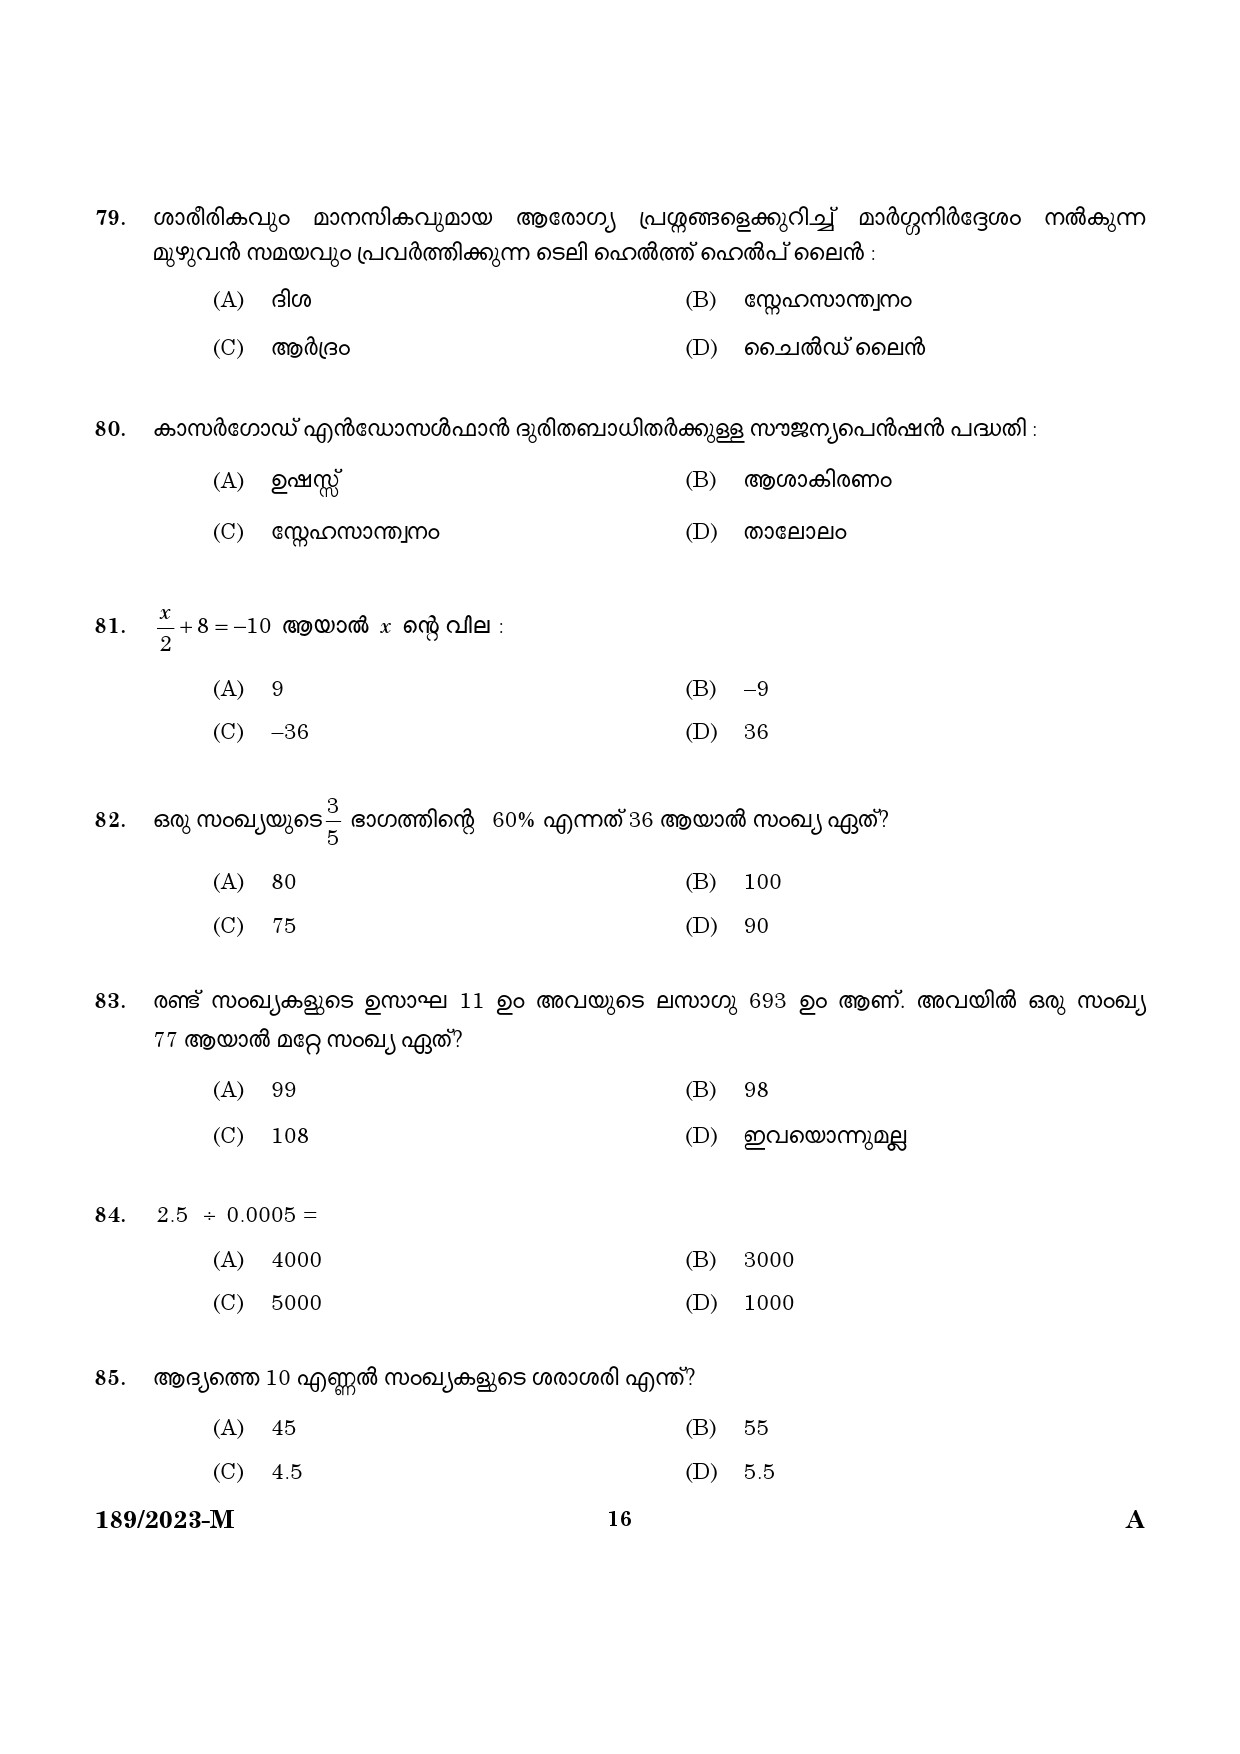 KPSC LGS Malayalam Exam 2023 Code 1892023 M 14